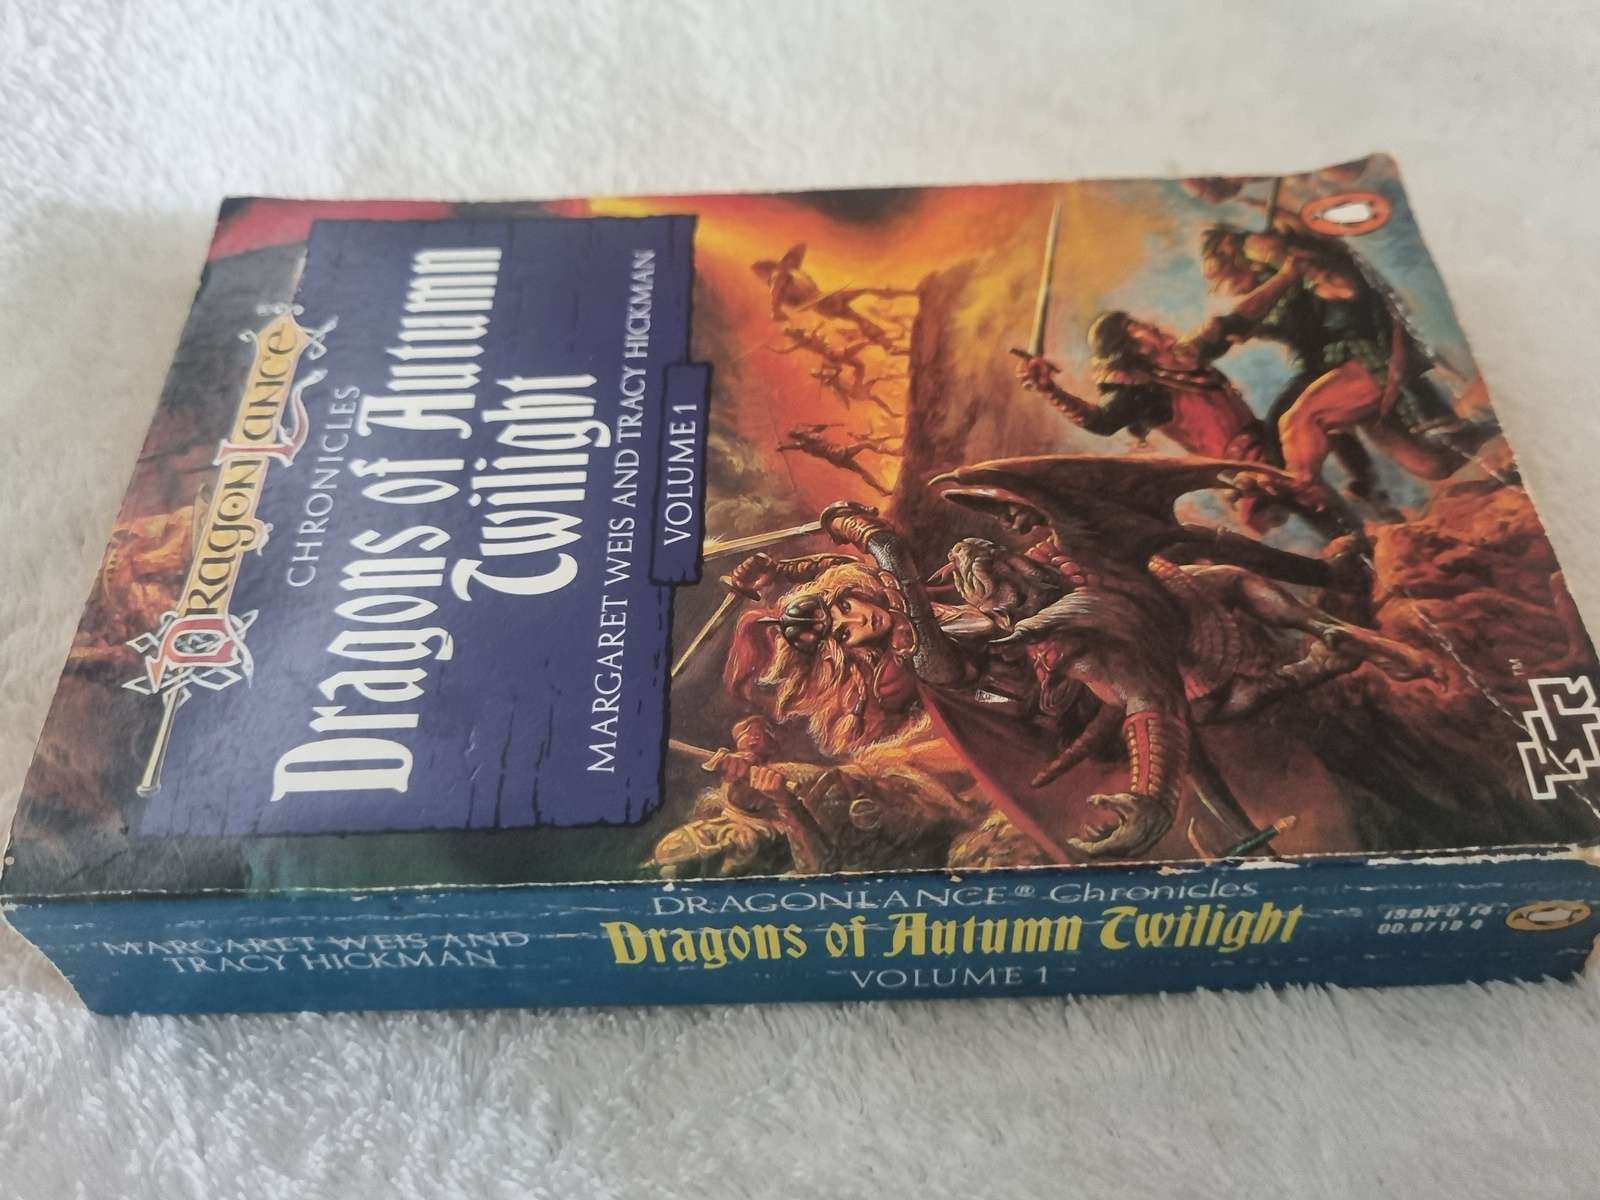 Dragonlance: Dragons of Autumn Twilight - Margaret Weis & Tracy Hickman